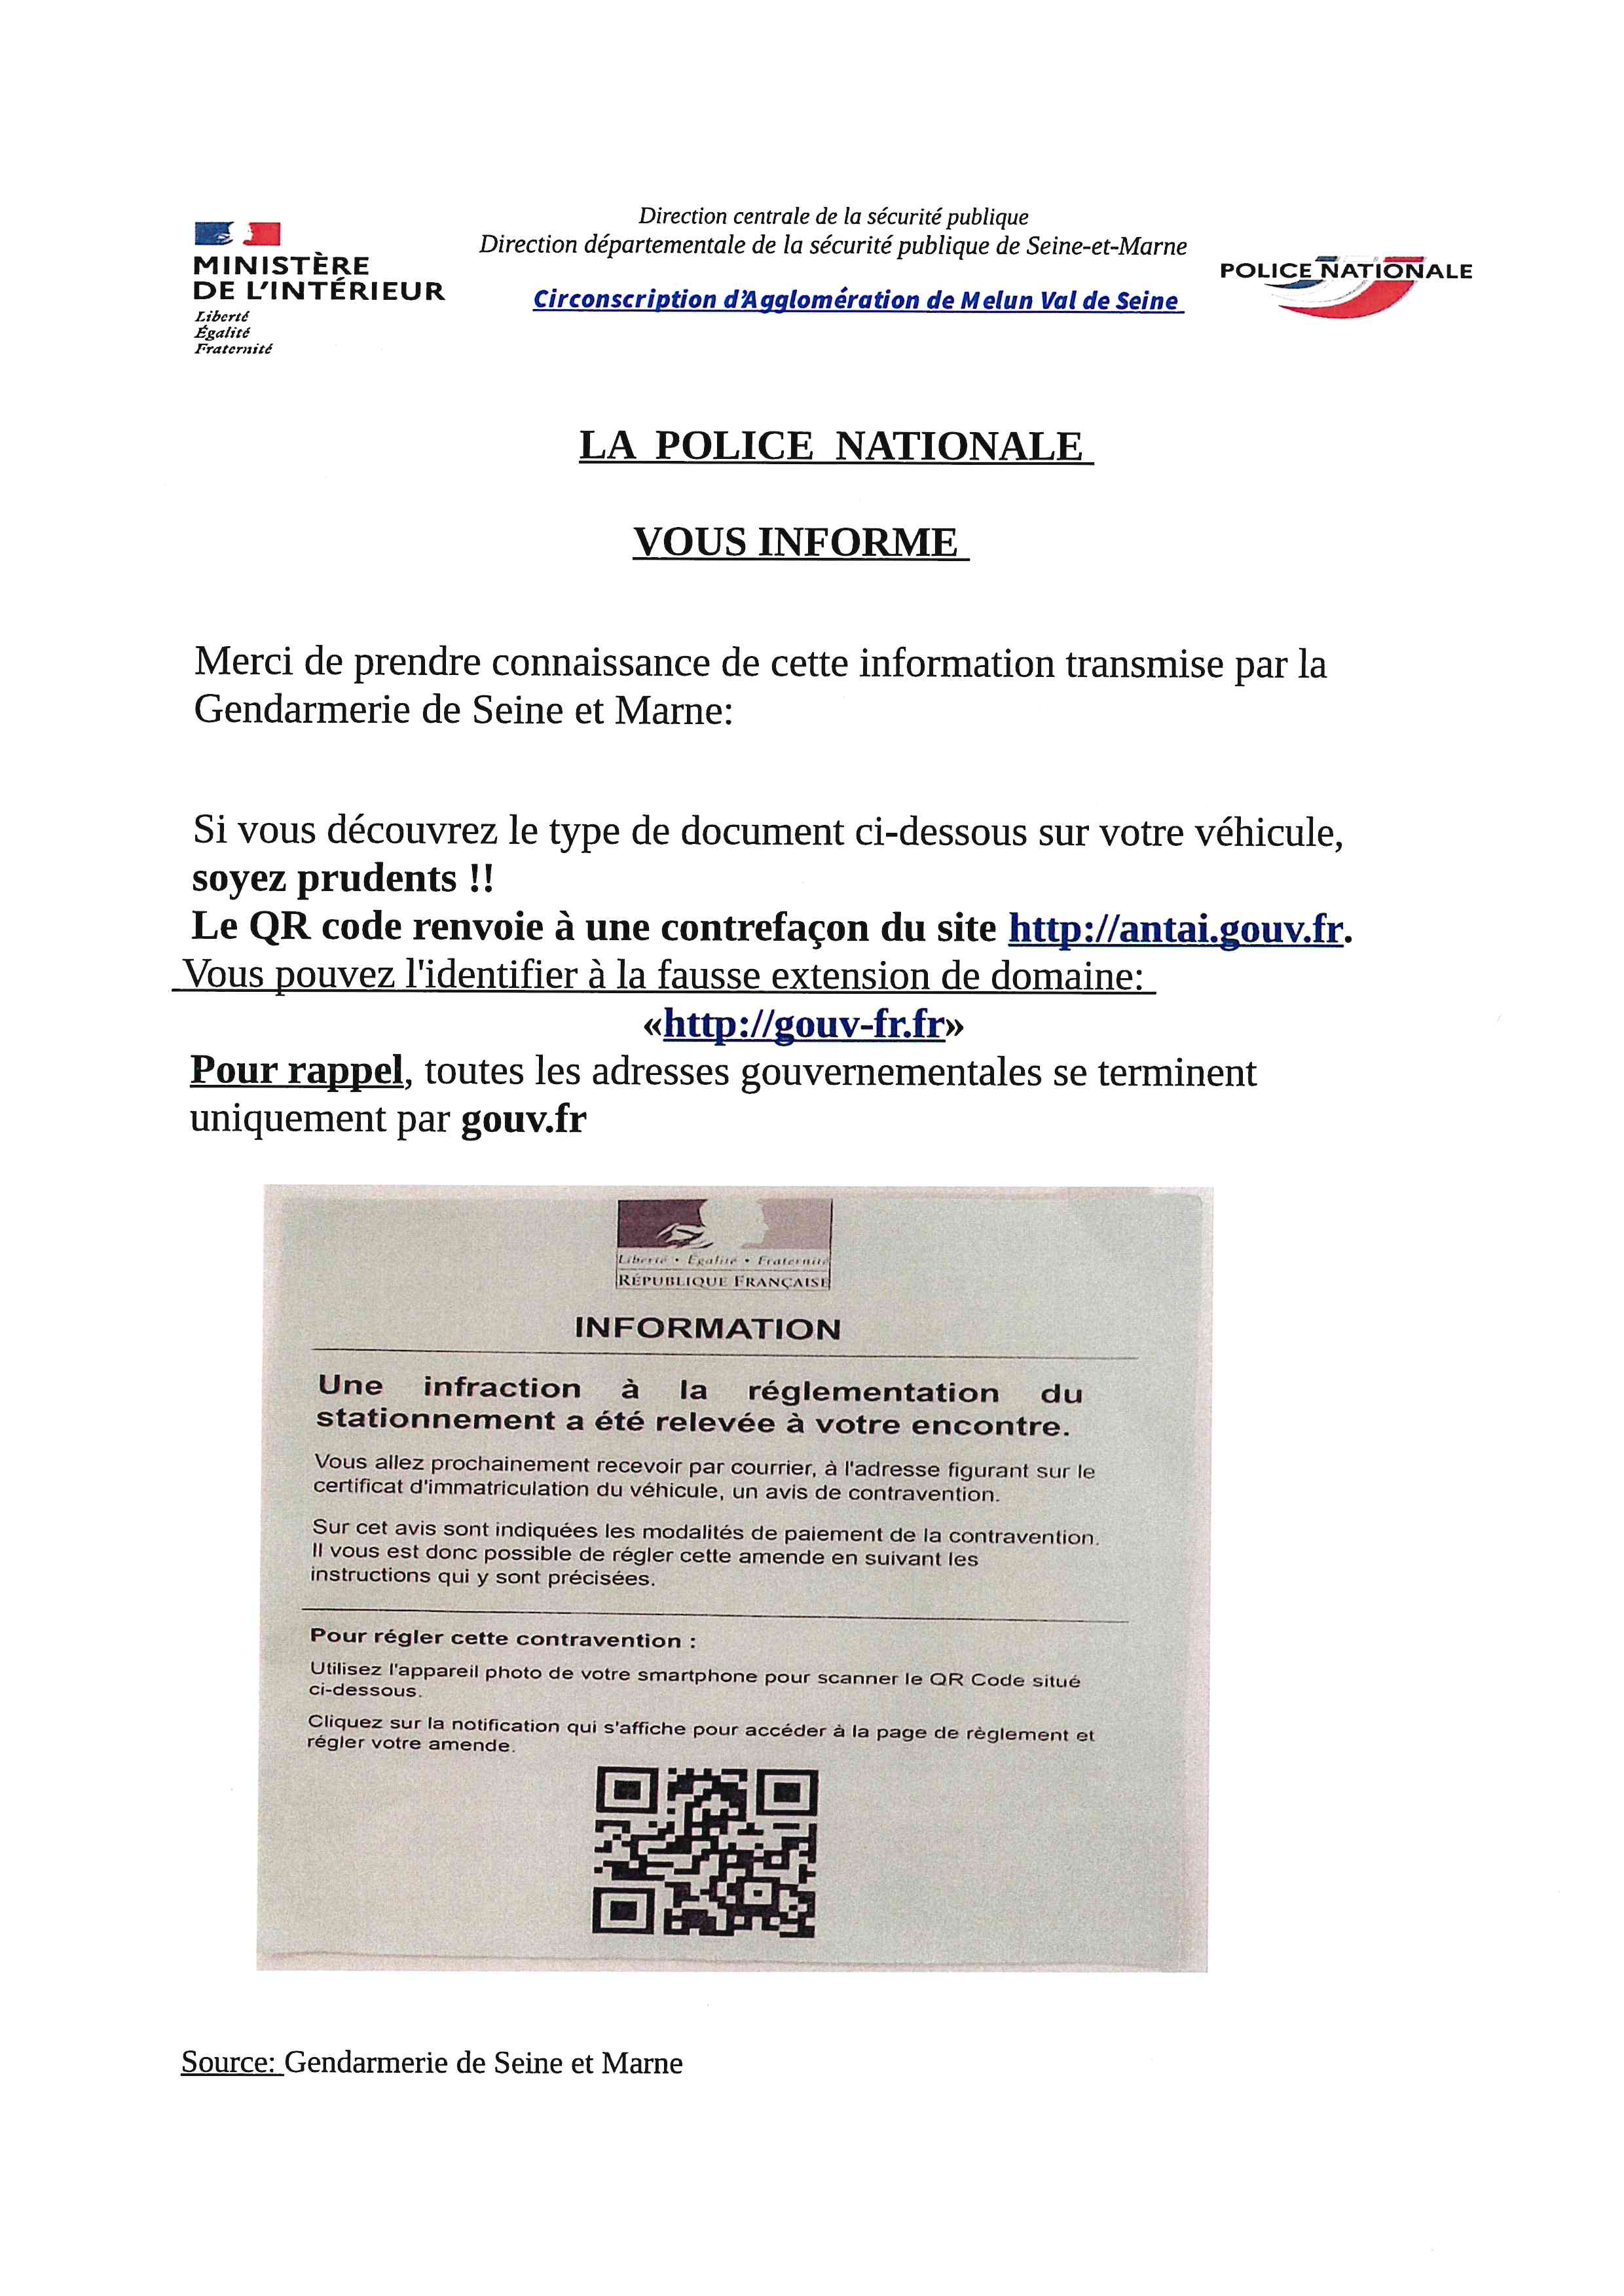 La Police Nationale vous informe contrefaçon 16.05.23.jpg